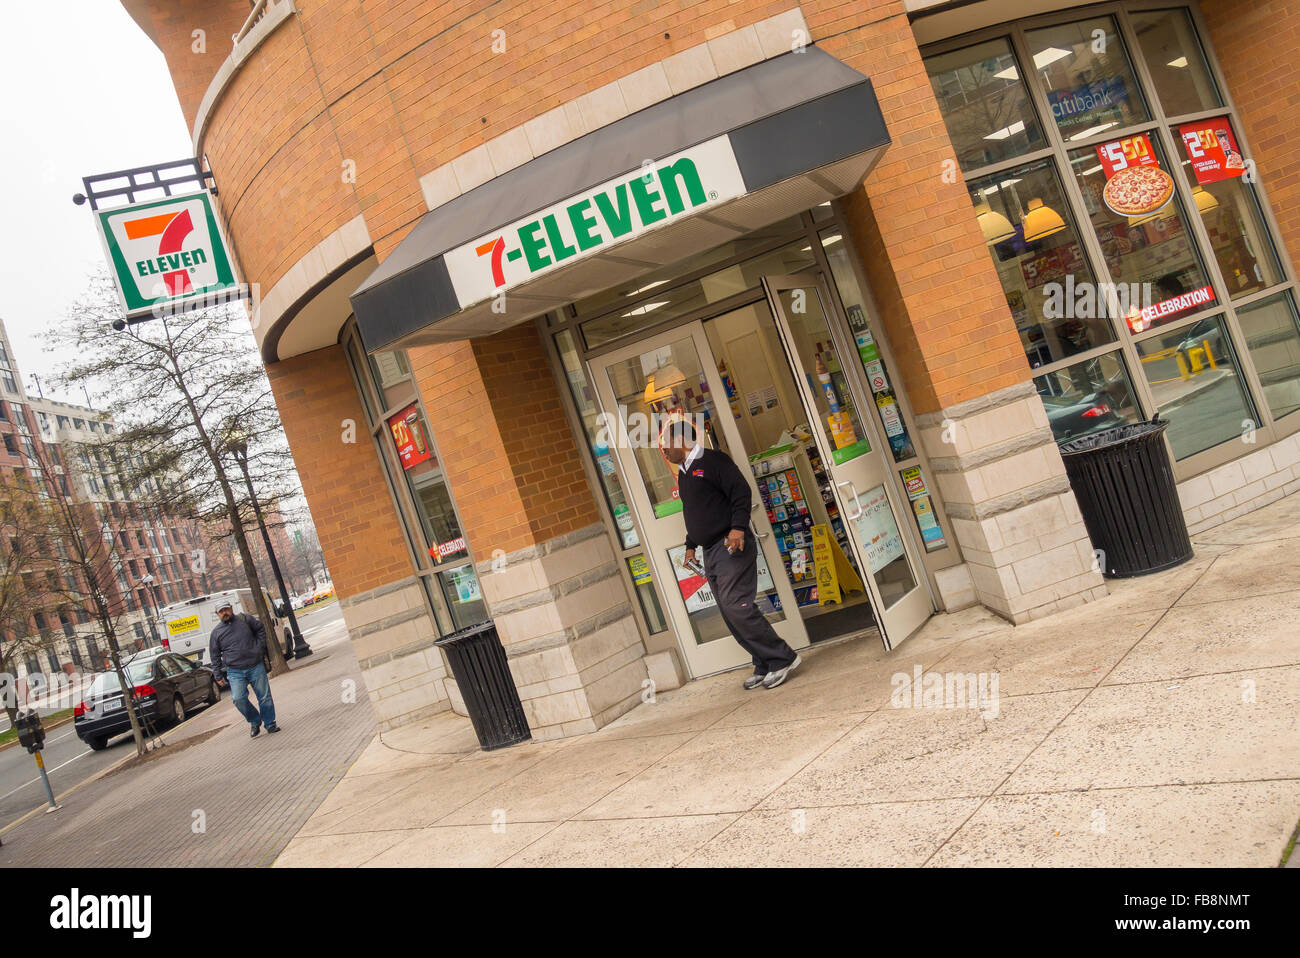 ARLINGTON, VIRGINIA, USA - Man leaving 7-eleven convenience store in Clarendon neighborhood. Stock Photo